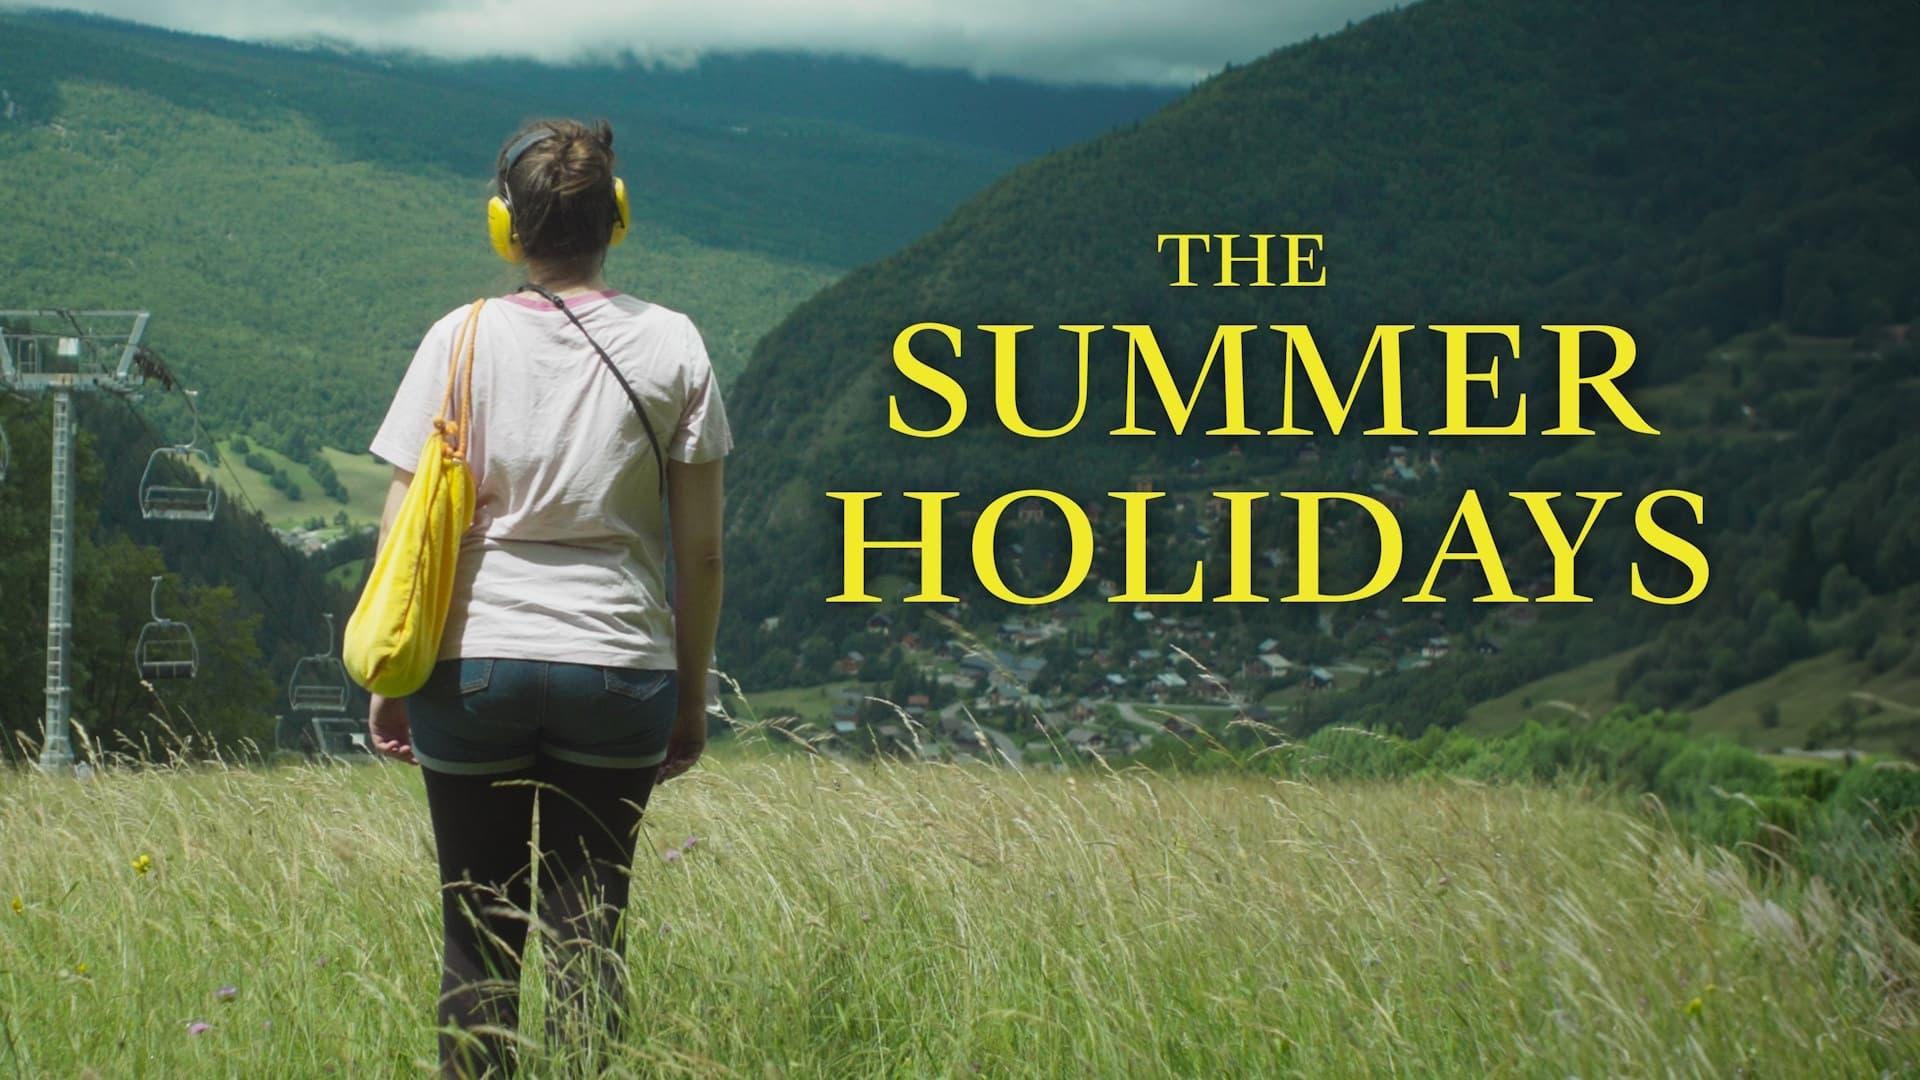 The Summer Holidays backdrop